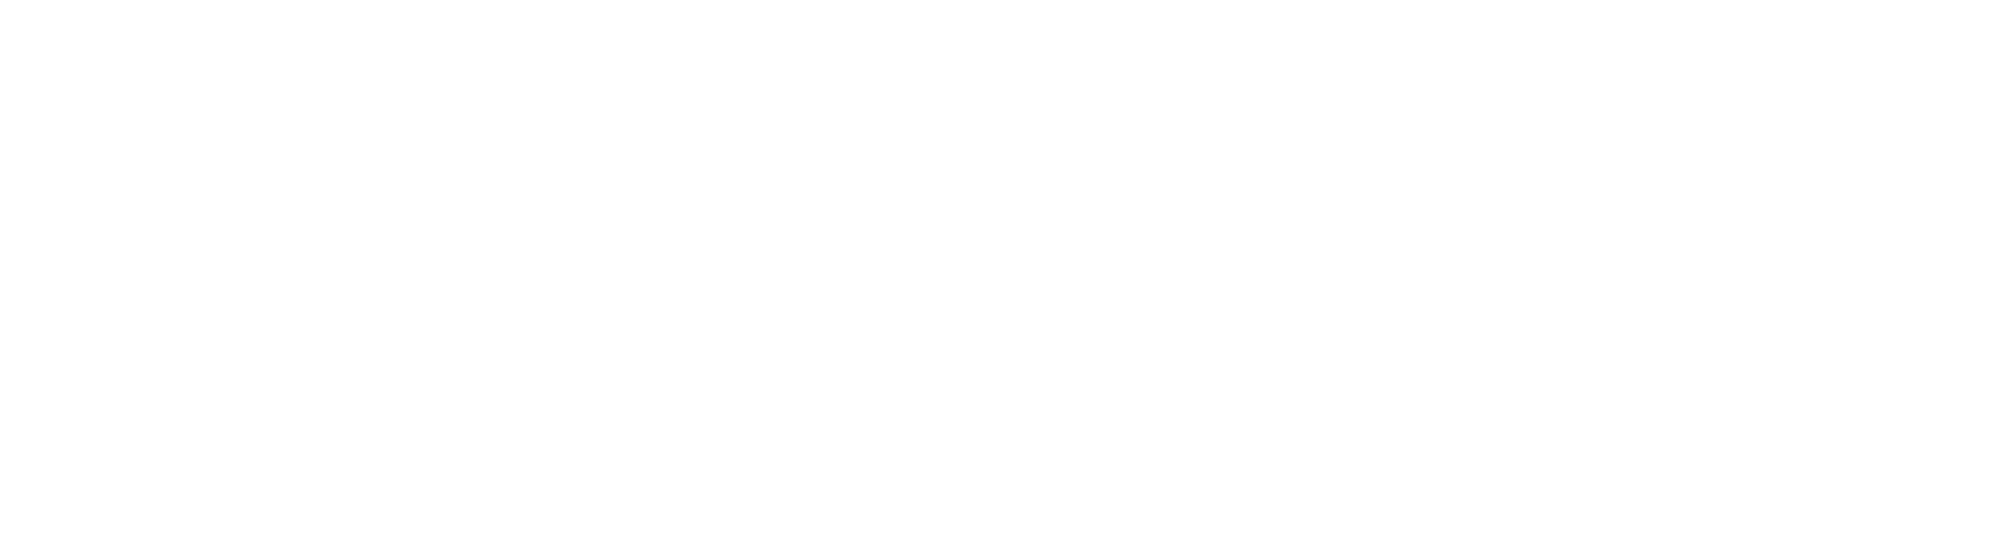 BikeRadar logo white